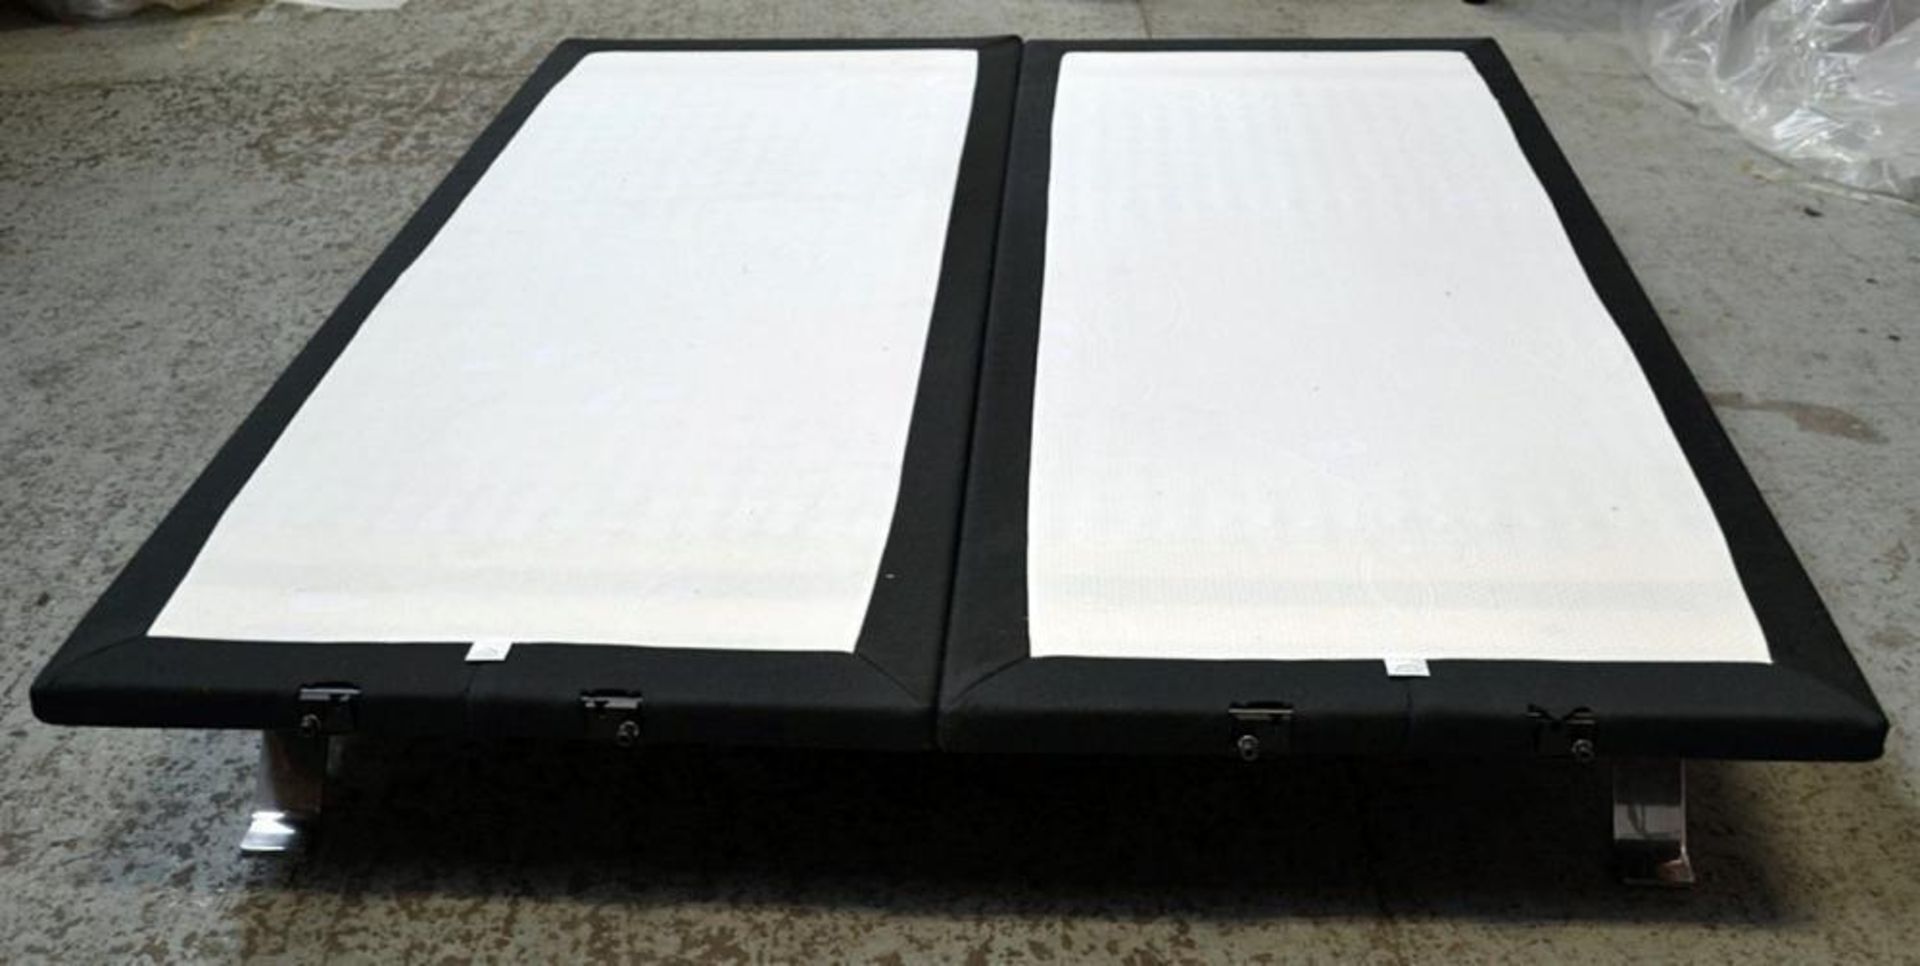 1 x Jensen EDEN Adjustable Superking Bed Base - W180 x L210 x H34cm - Colour: Black - CL087 - Ref: 2 - Image 8 of 13